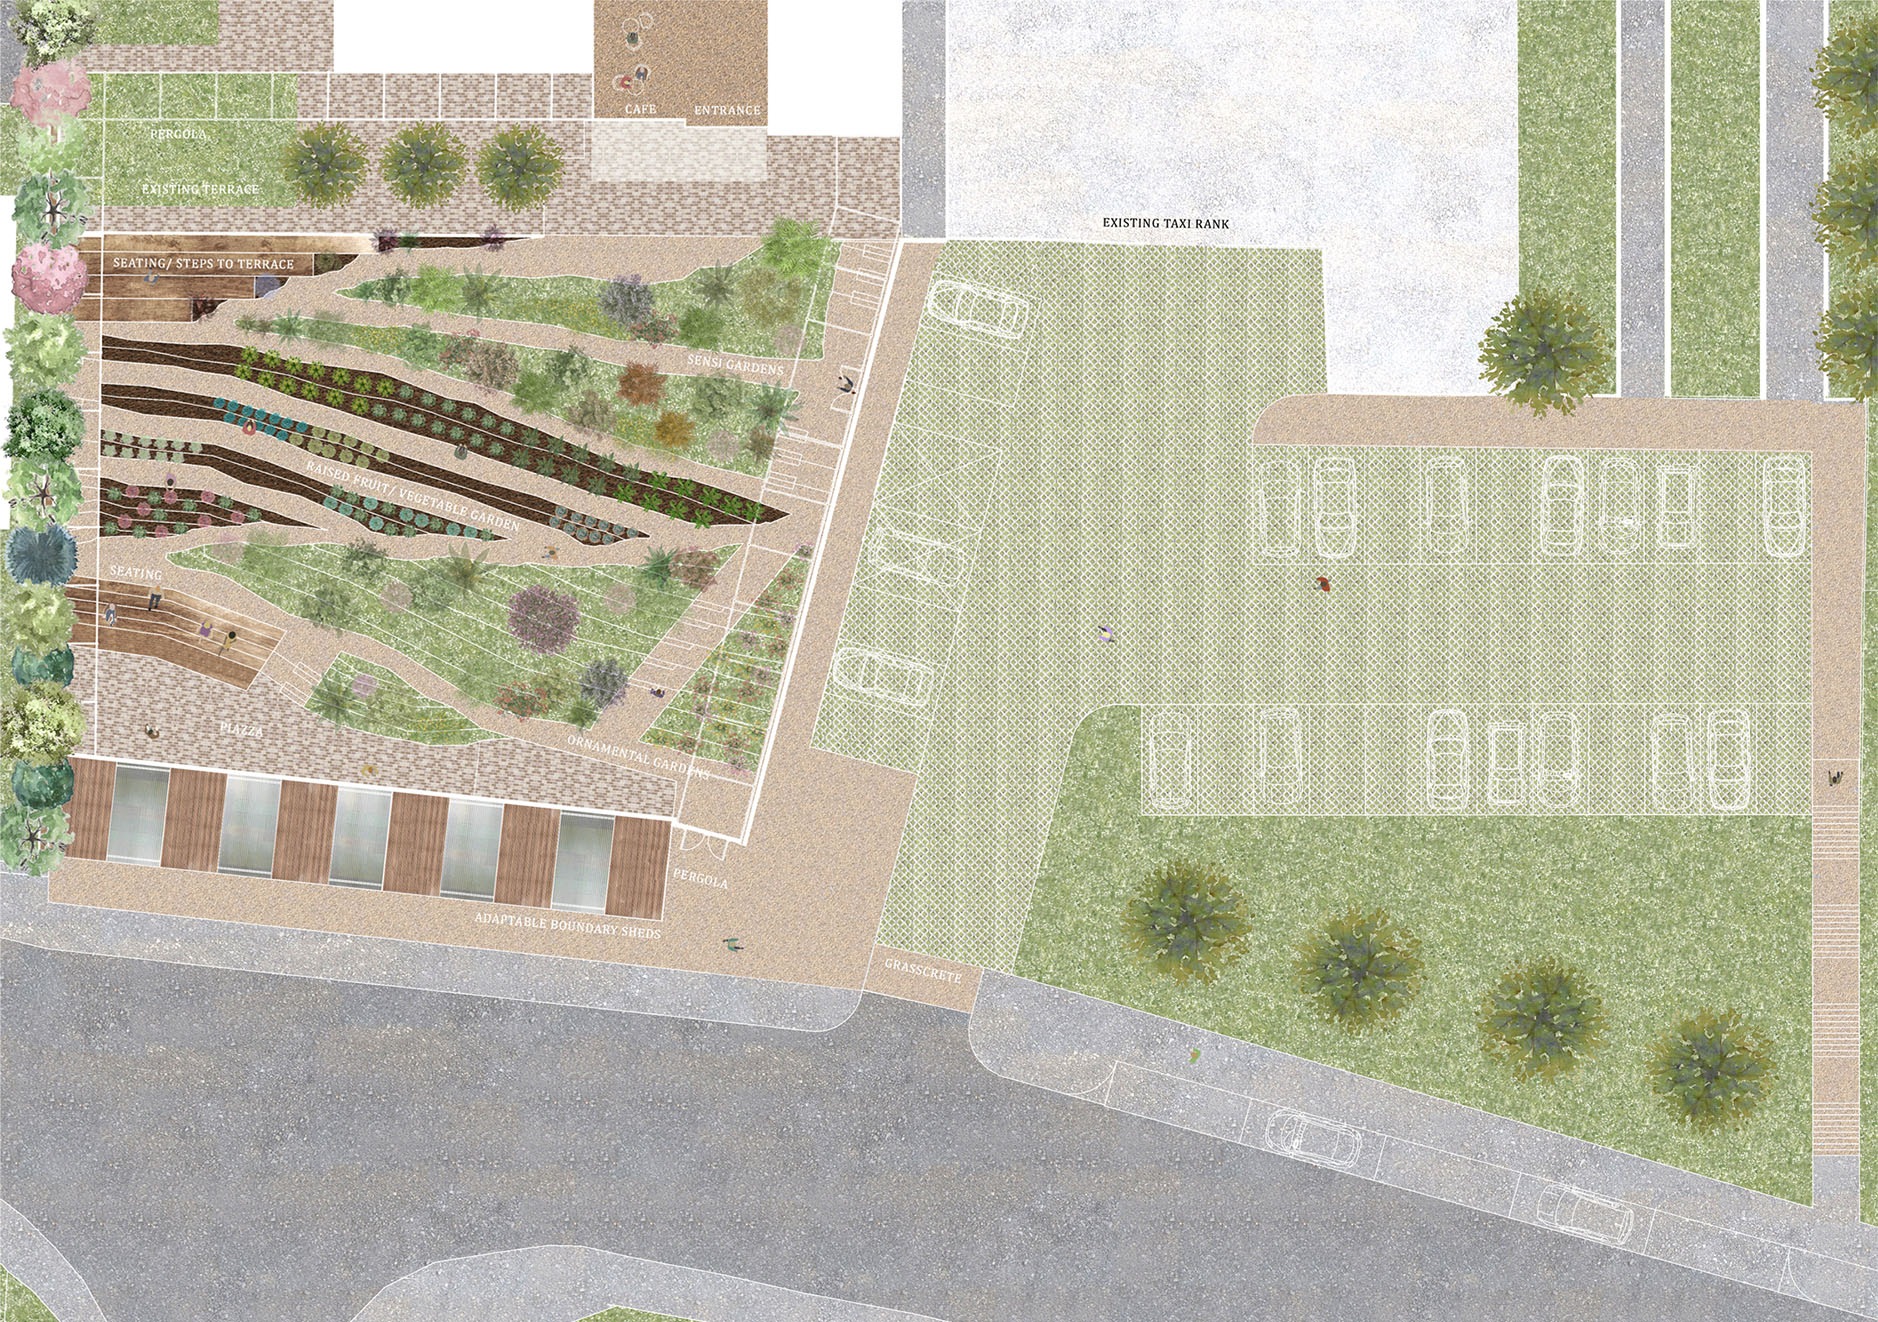 Community Garden, Belfast - MMAS Architecture, Planning and Urban Design